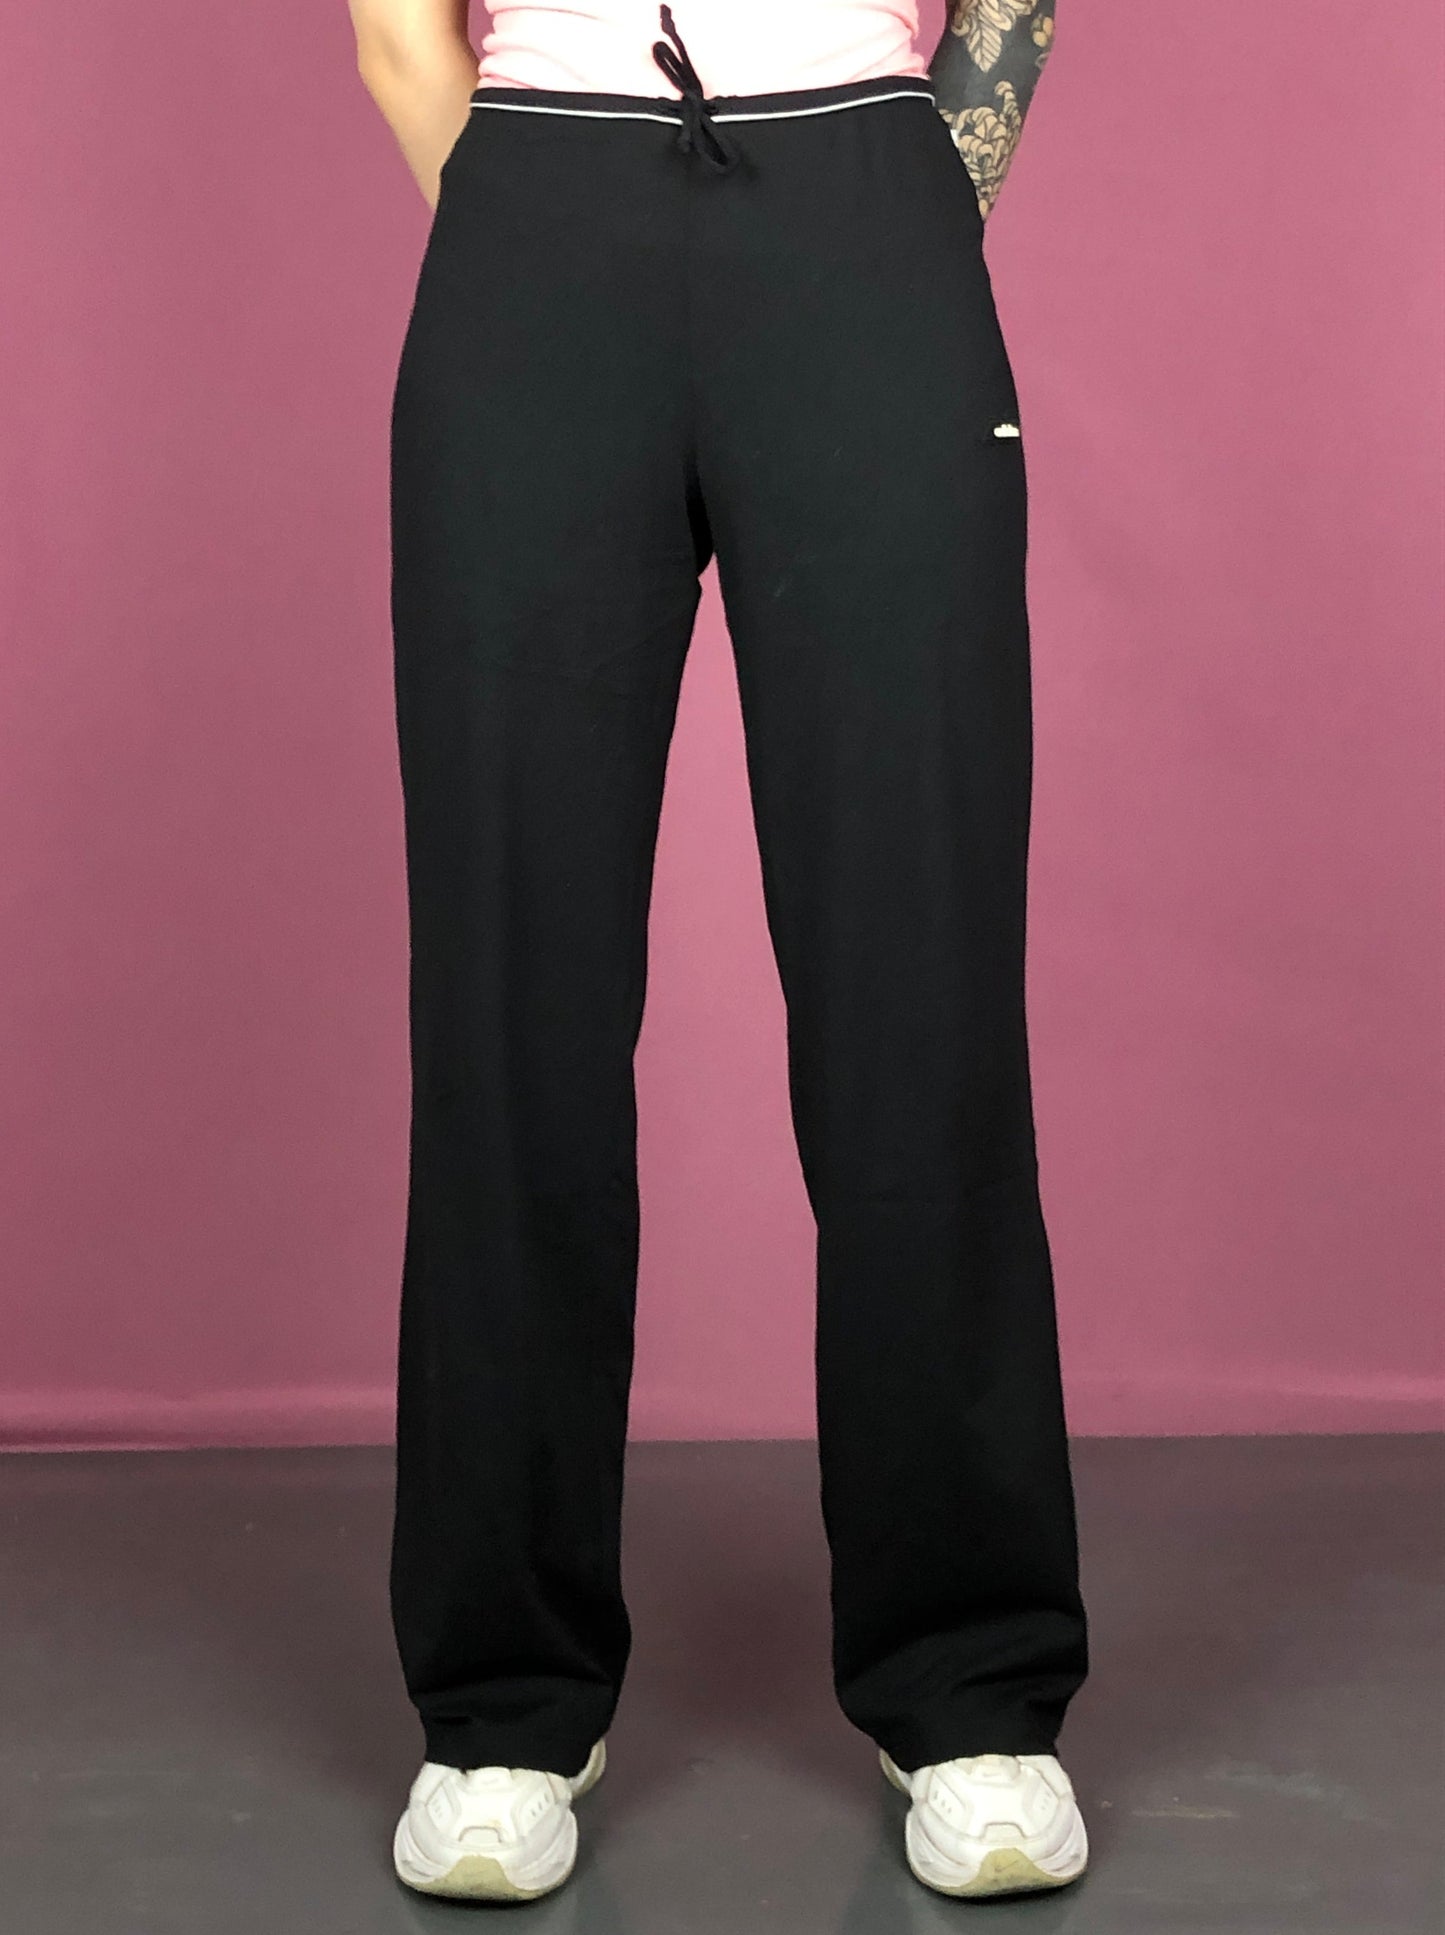 Adidas Vintage Women's Straight Track Pants - L Black Nylon Blend